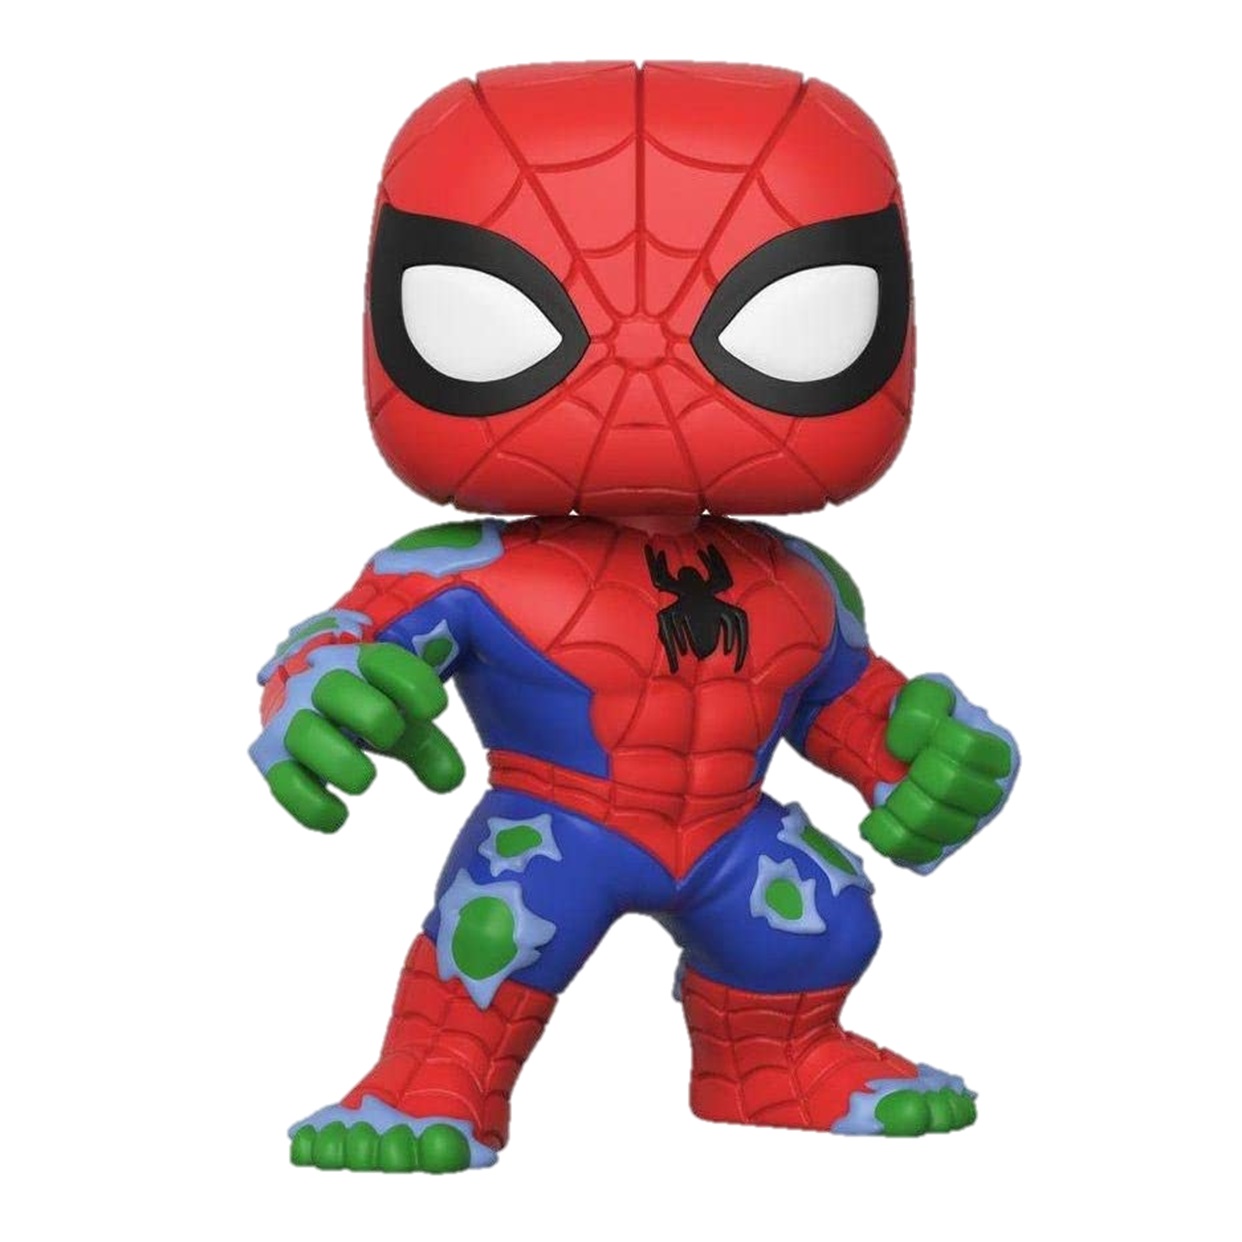 Spider Hulk #374 Figura Funko Pop! Exclusivo Walgreens